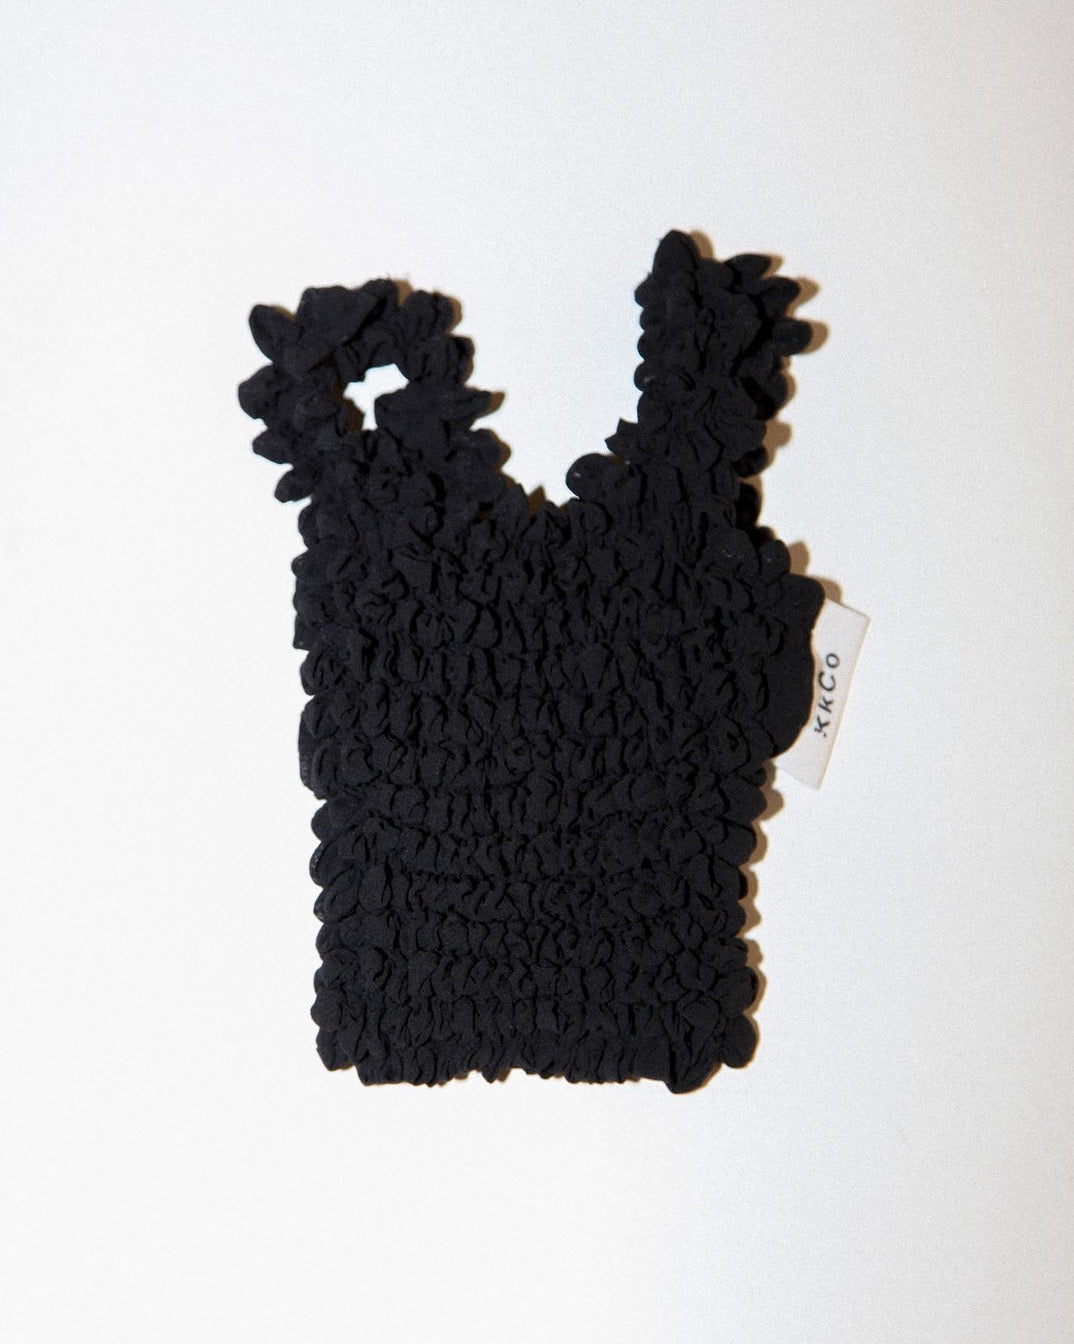 small handbag in a black popcorn pleated fabric from Kkco 